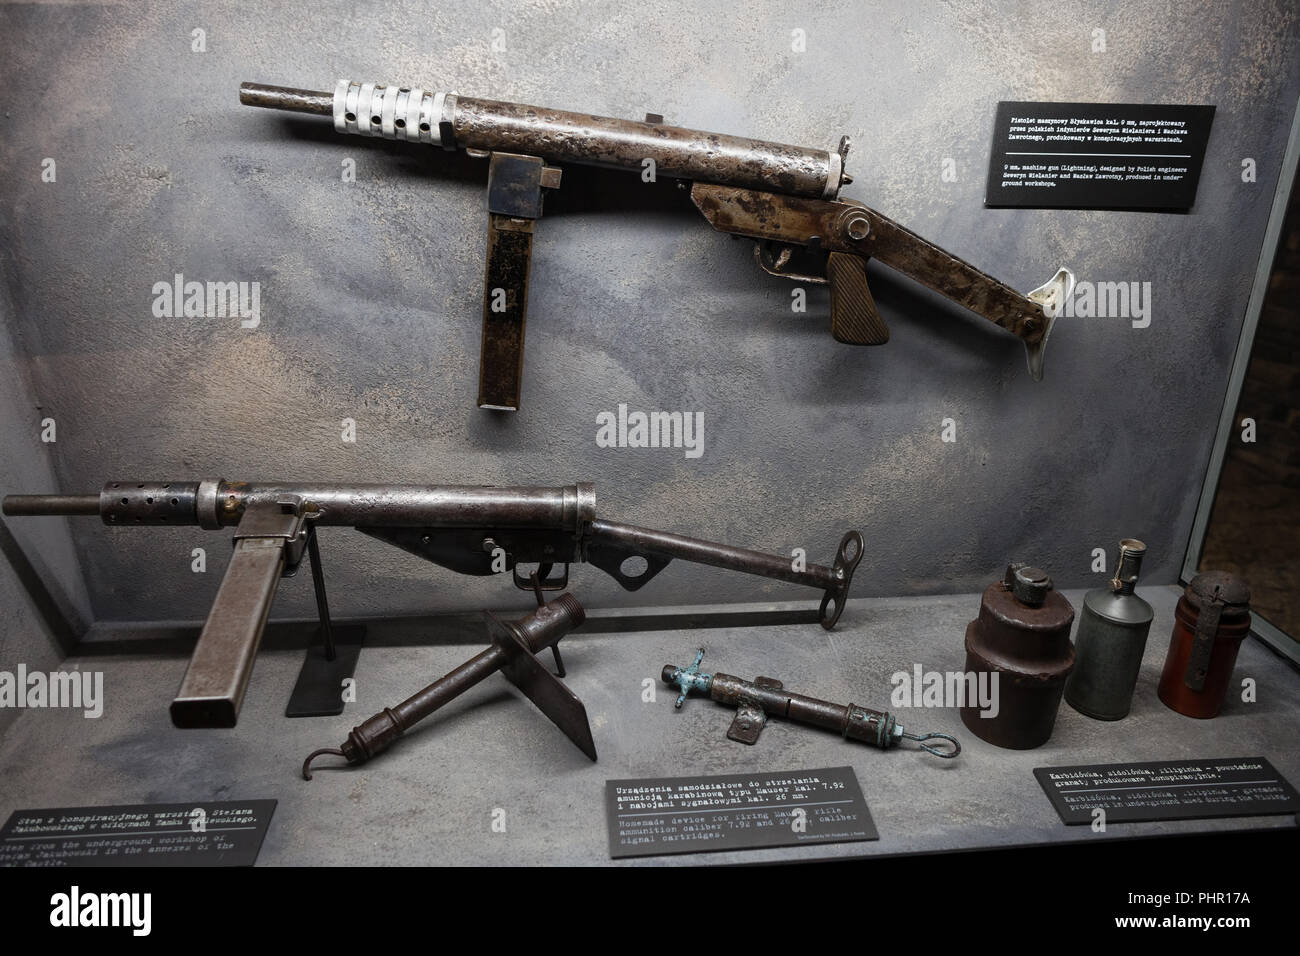 Insurgent weapons - Błyskawica (Lightning) 9mm machine gun and STEN submachine gun in Warsaw Uprising Museum (Warsaw Rising Museum) in Warsaw, Poland Stock Photo